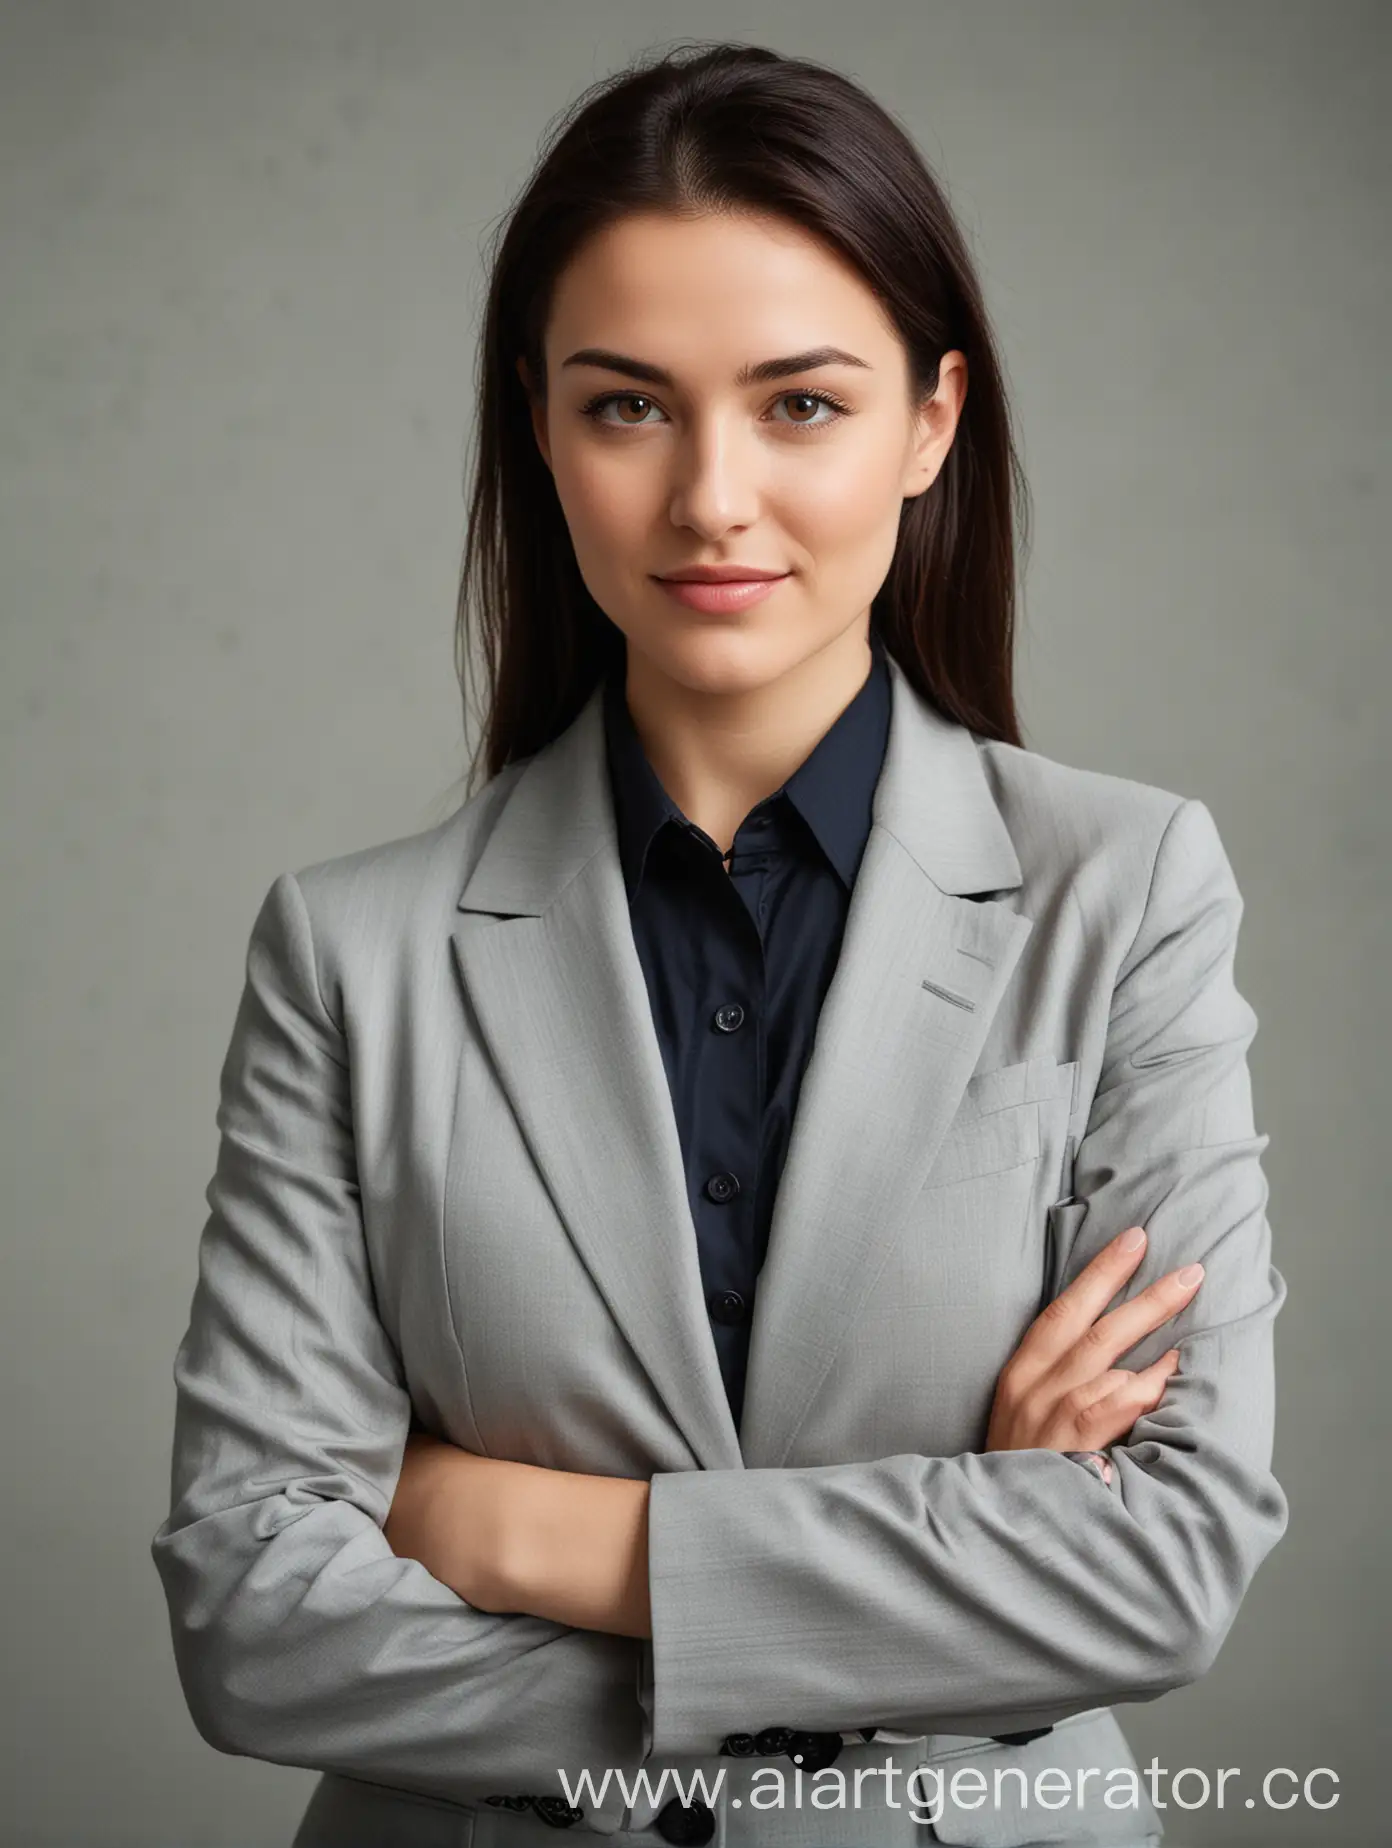 Confident-Businesswoman-in-Professional-Attire